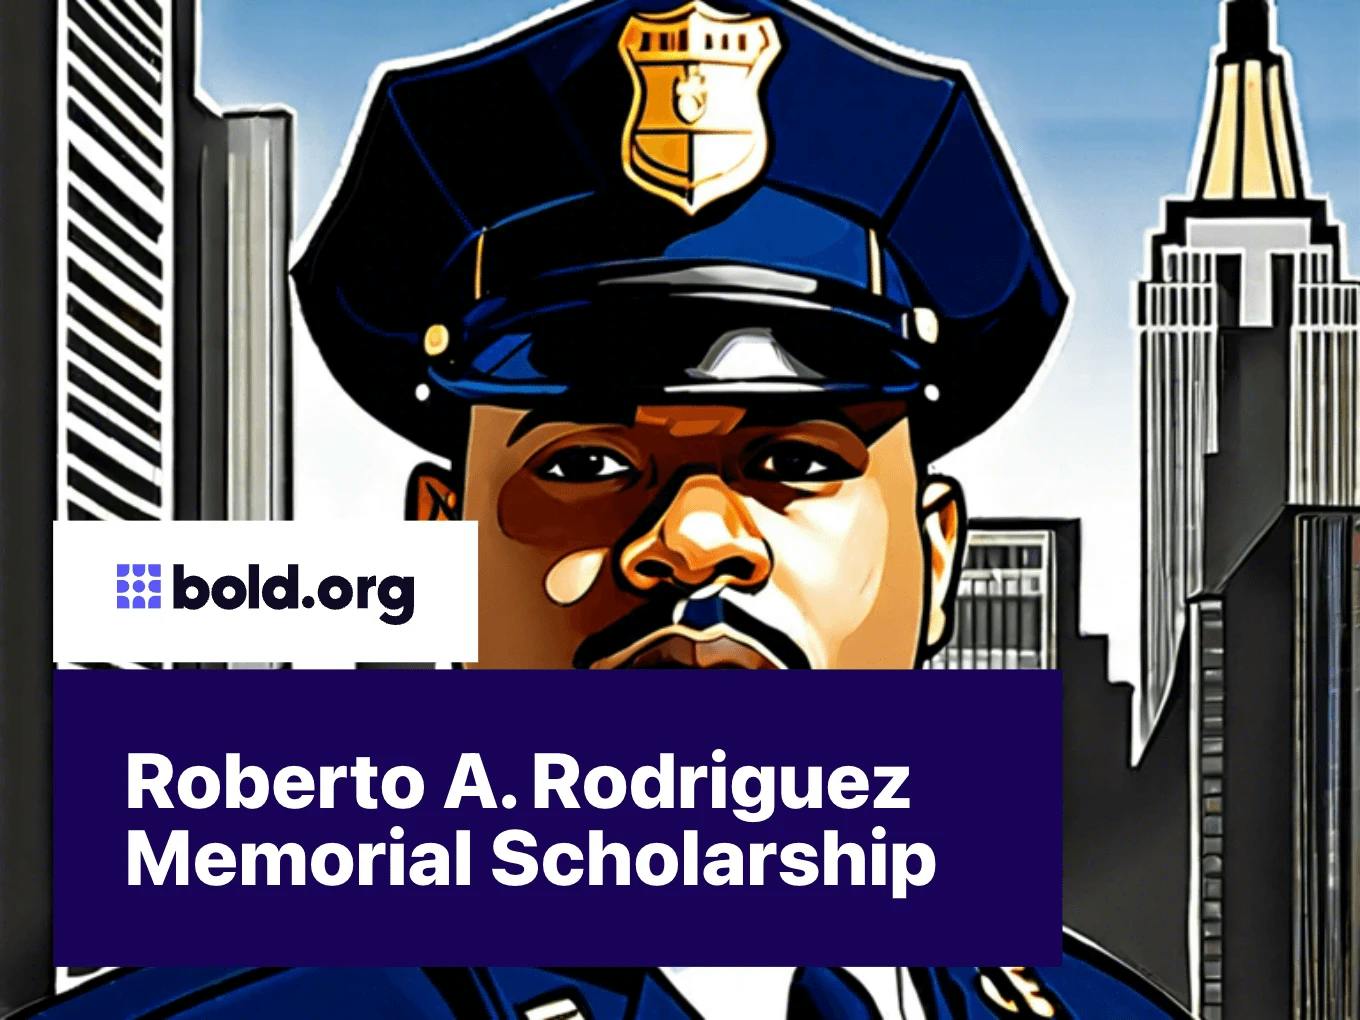 Roberto A. Rodriguez Memorial Scholarship